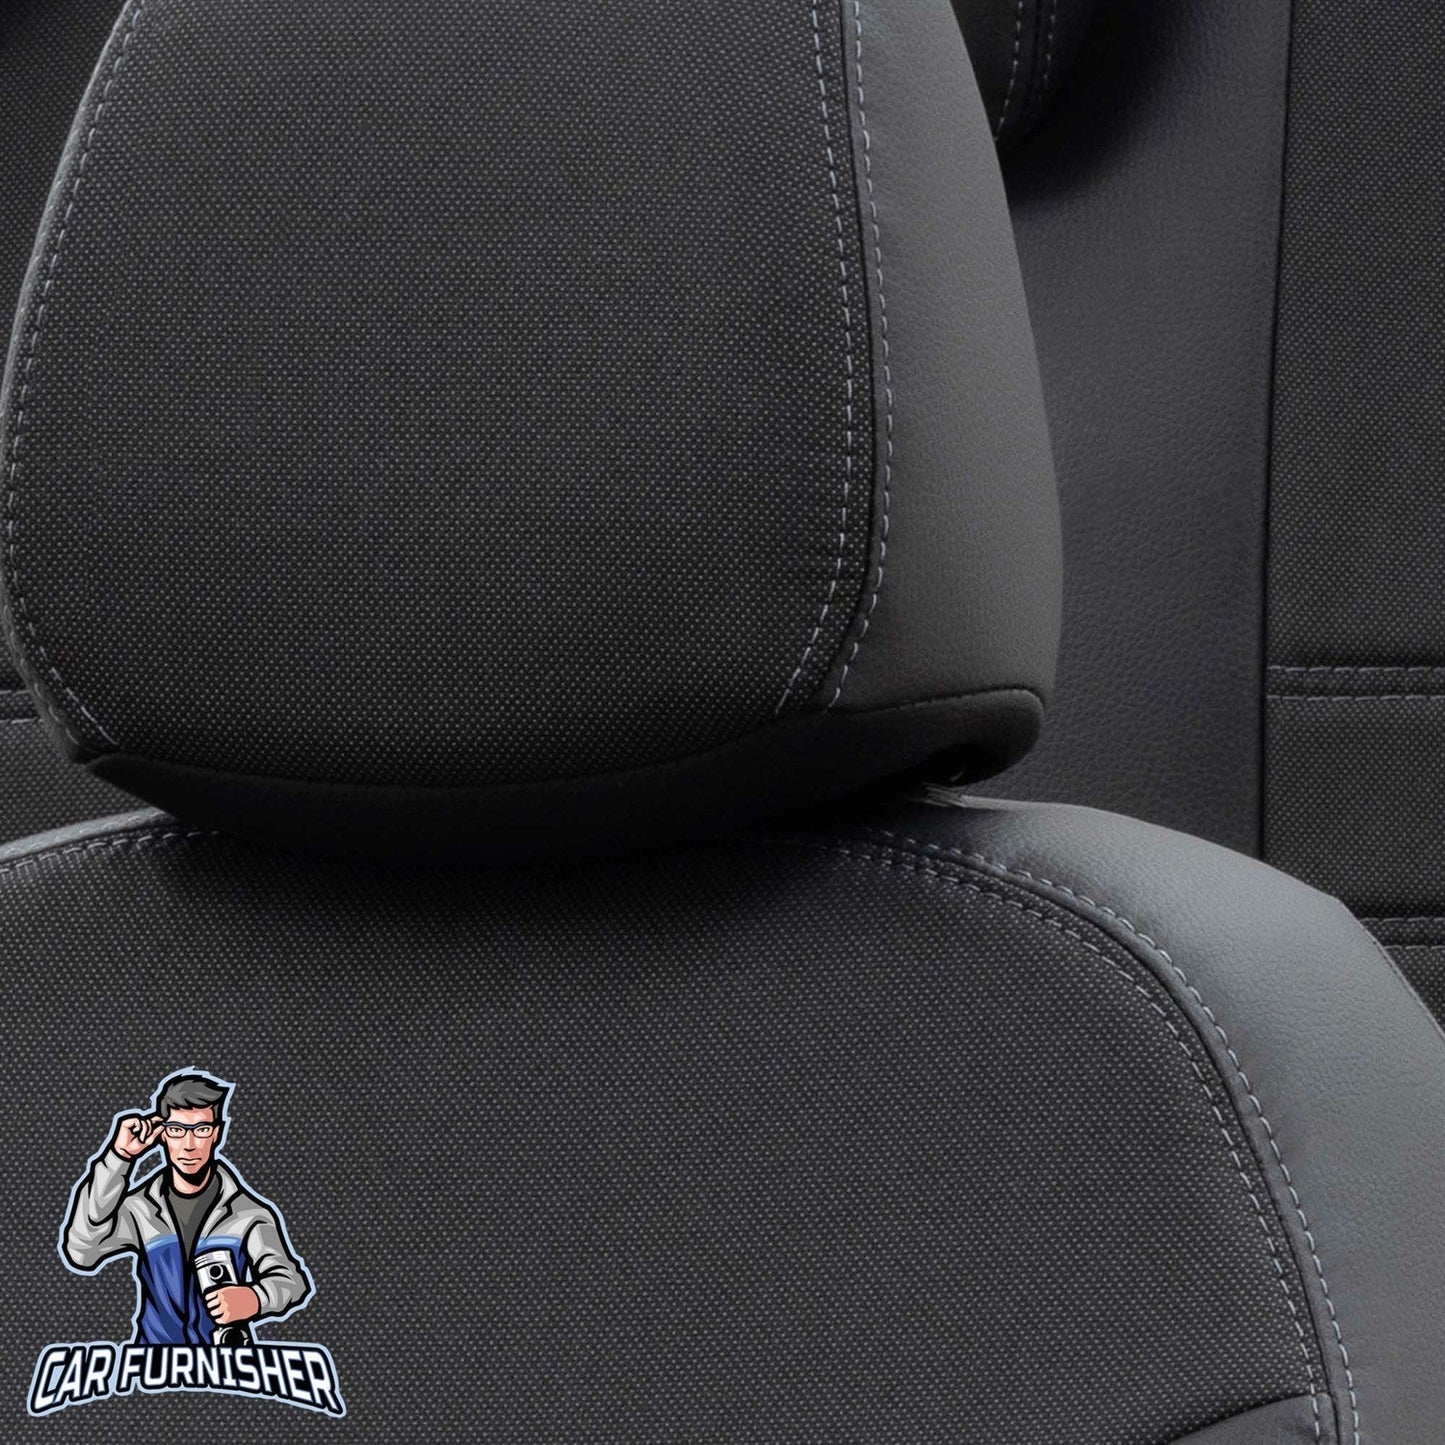 Renault Trafic Seat Covers Paris Leather & Jacquard Design Black Leather & Jacquard Fabric